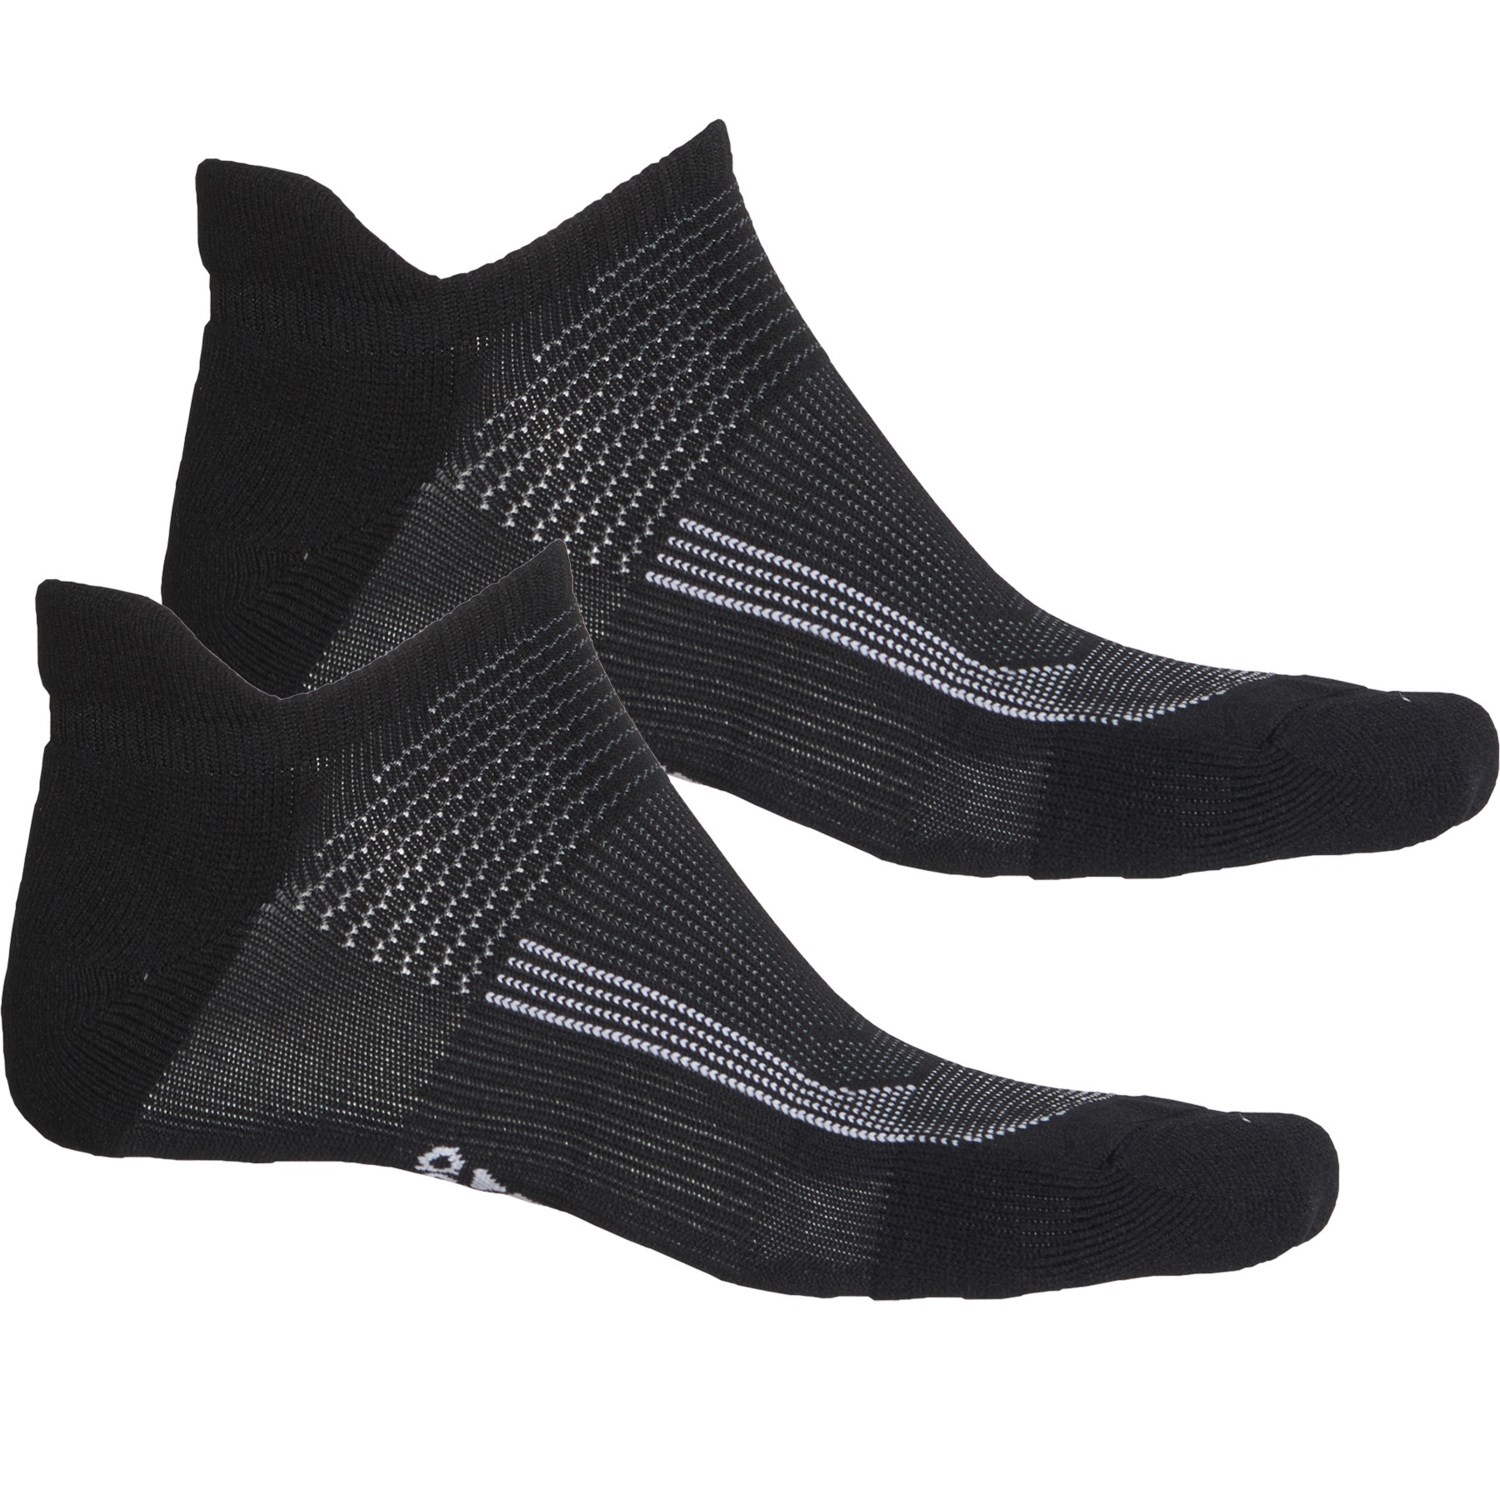 adidas Superlite Tabbed No-Show Socks (For Men) - Save 57%